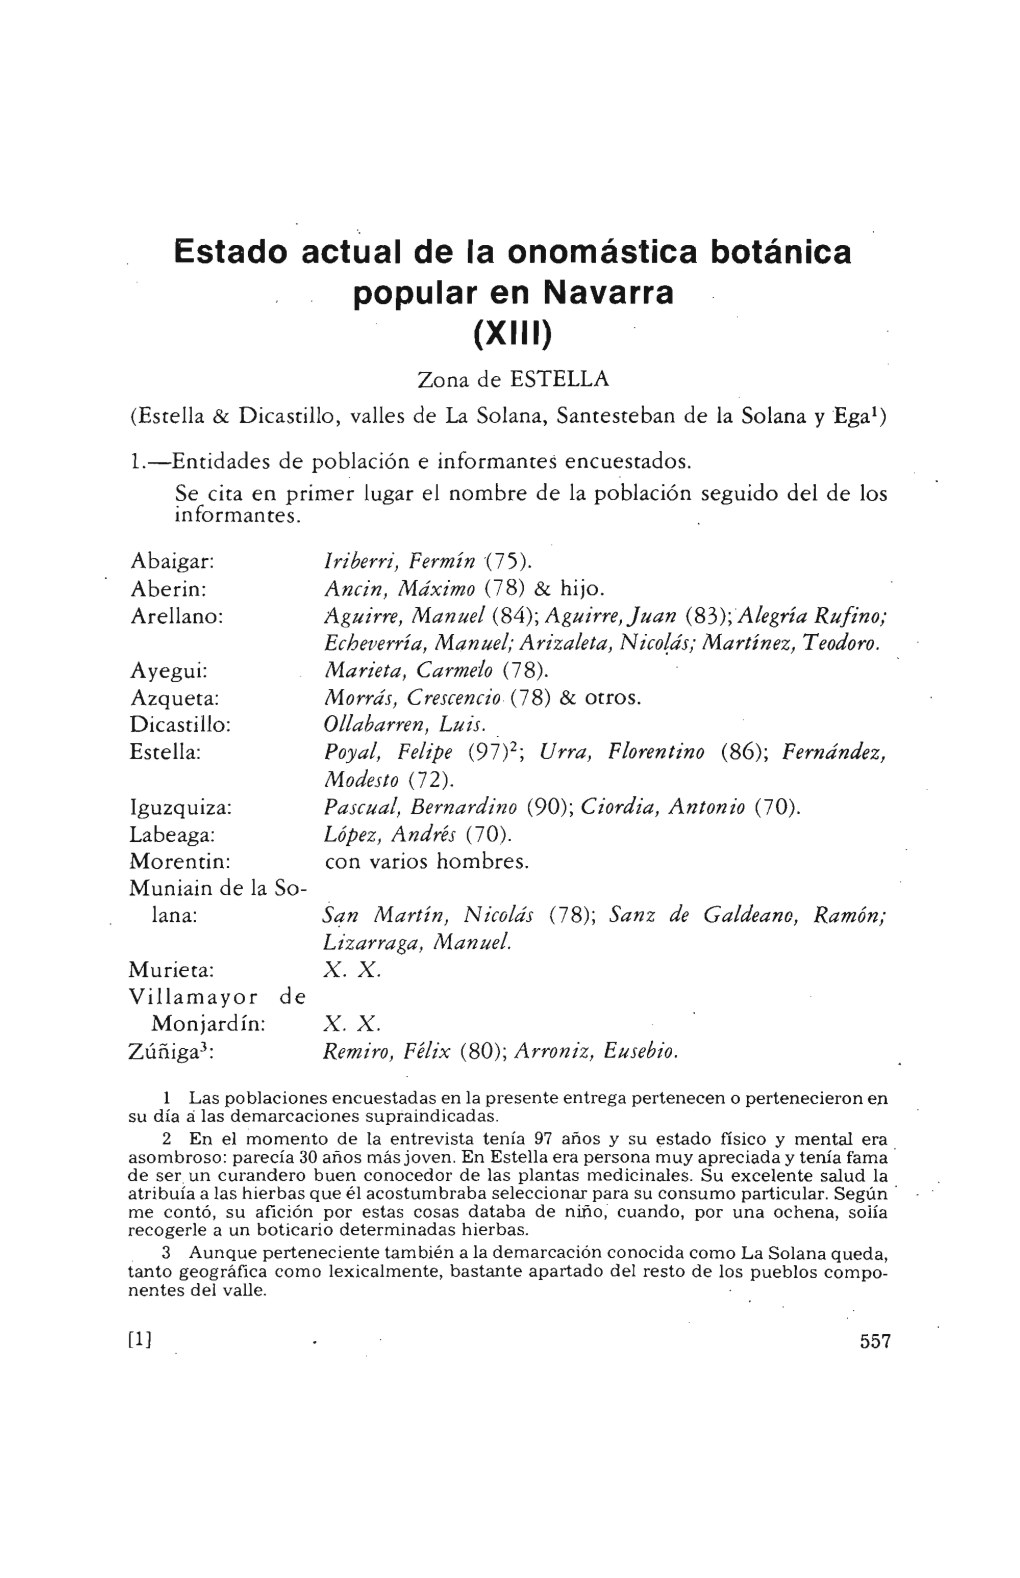 Estado Actual De La Onomástica Botánica Popular En Navarra (Xl I 1)